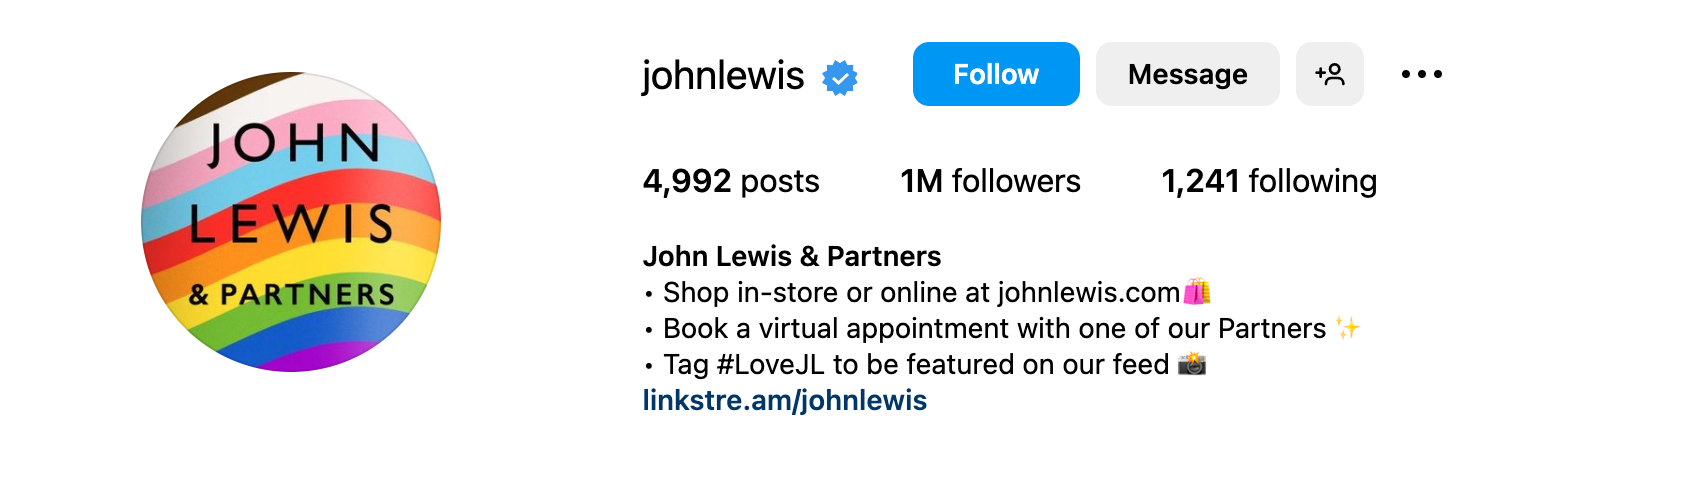 Instagram bio ideas - John Lewis